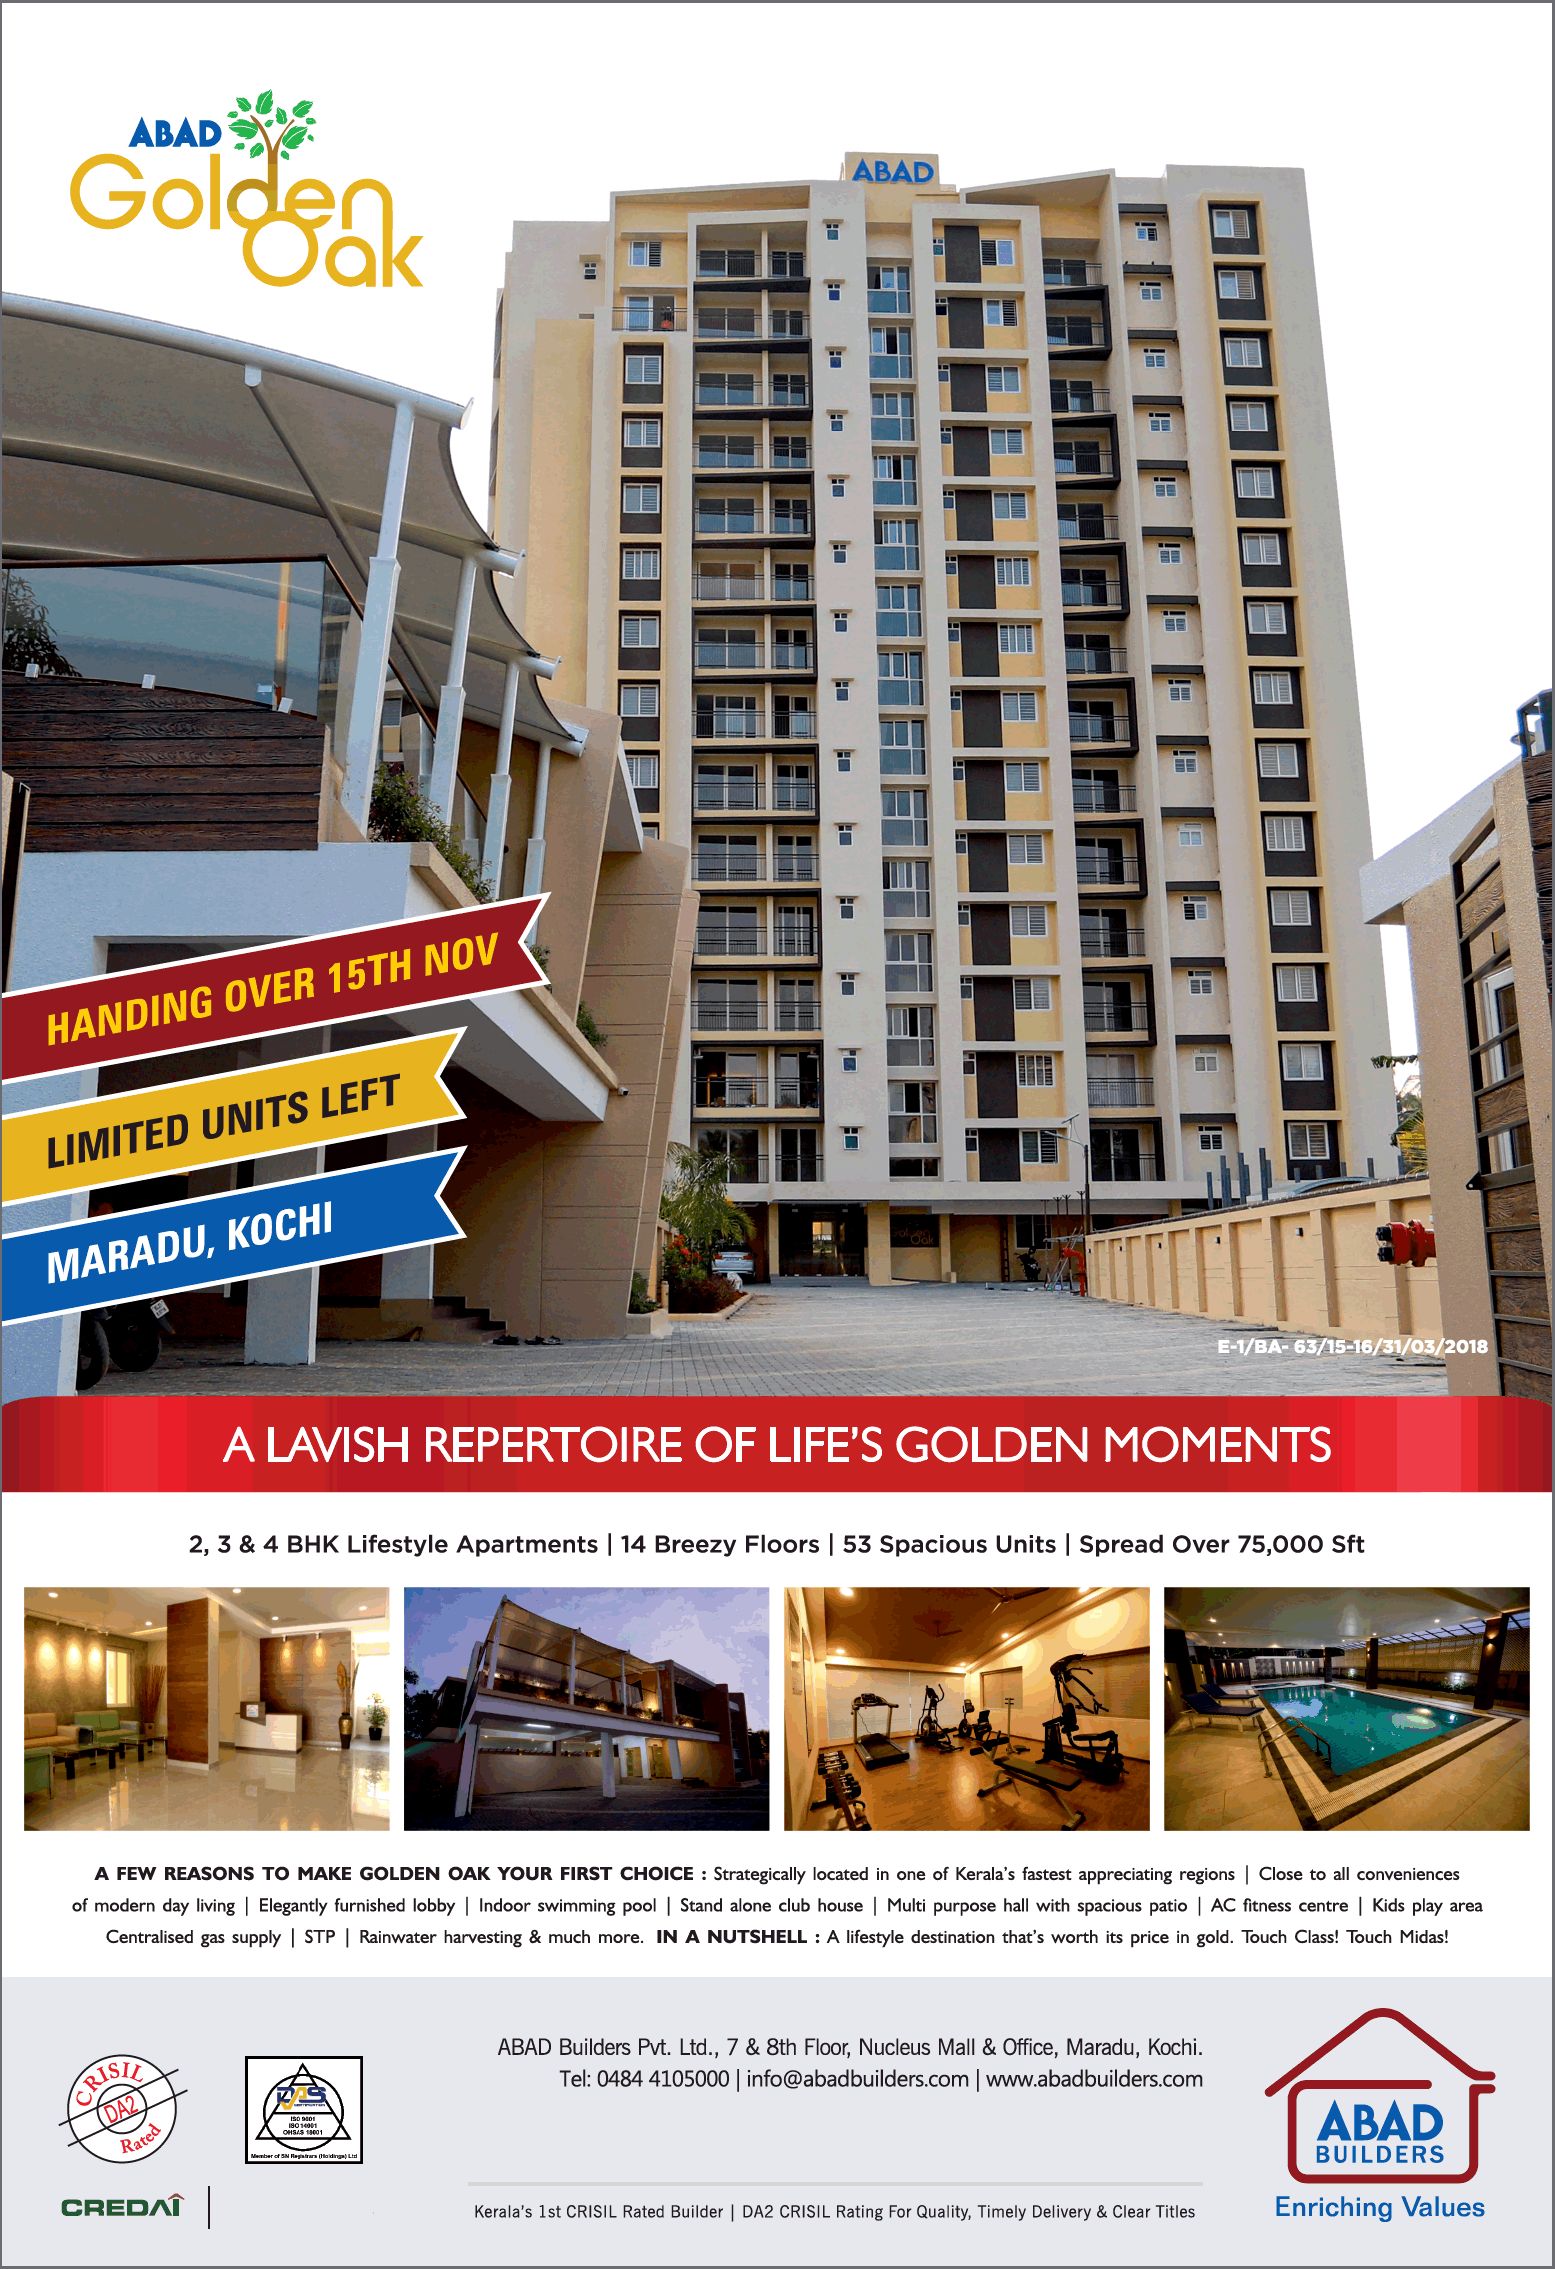 Book 2, 3 & 4 BHK lifestyle apartments at ABAD Golden Oak, Kochi Update